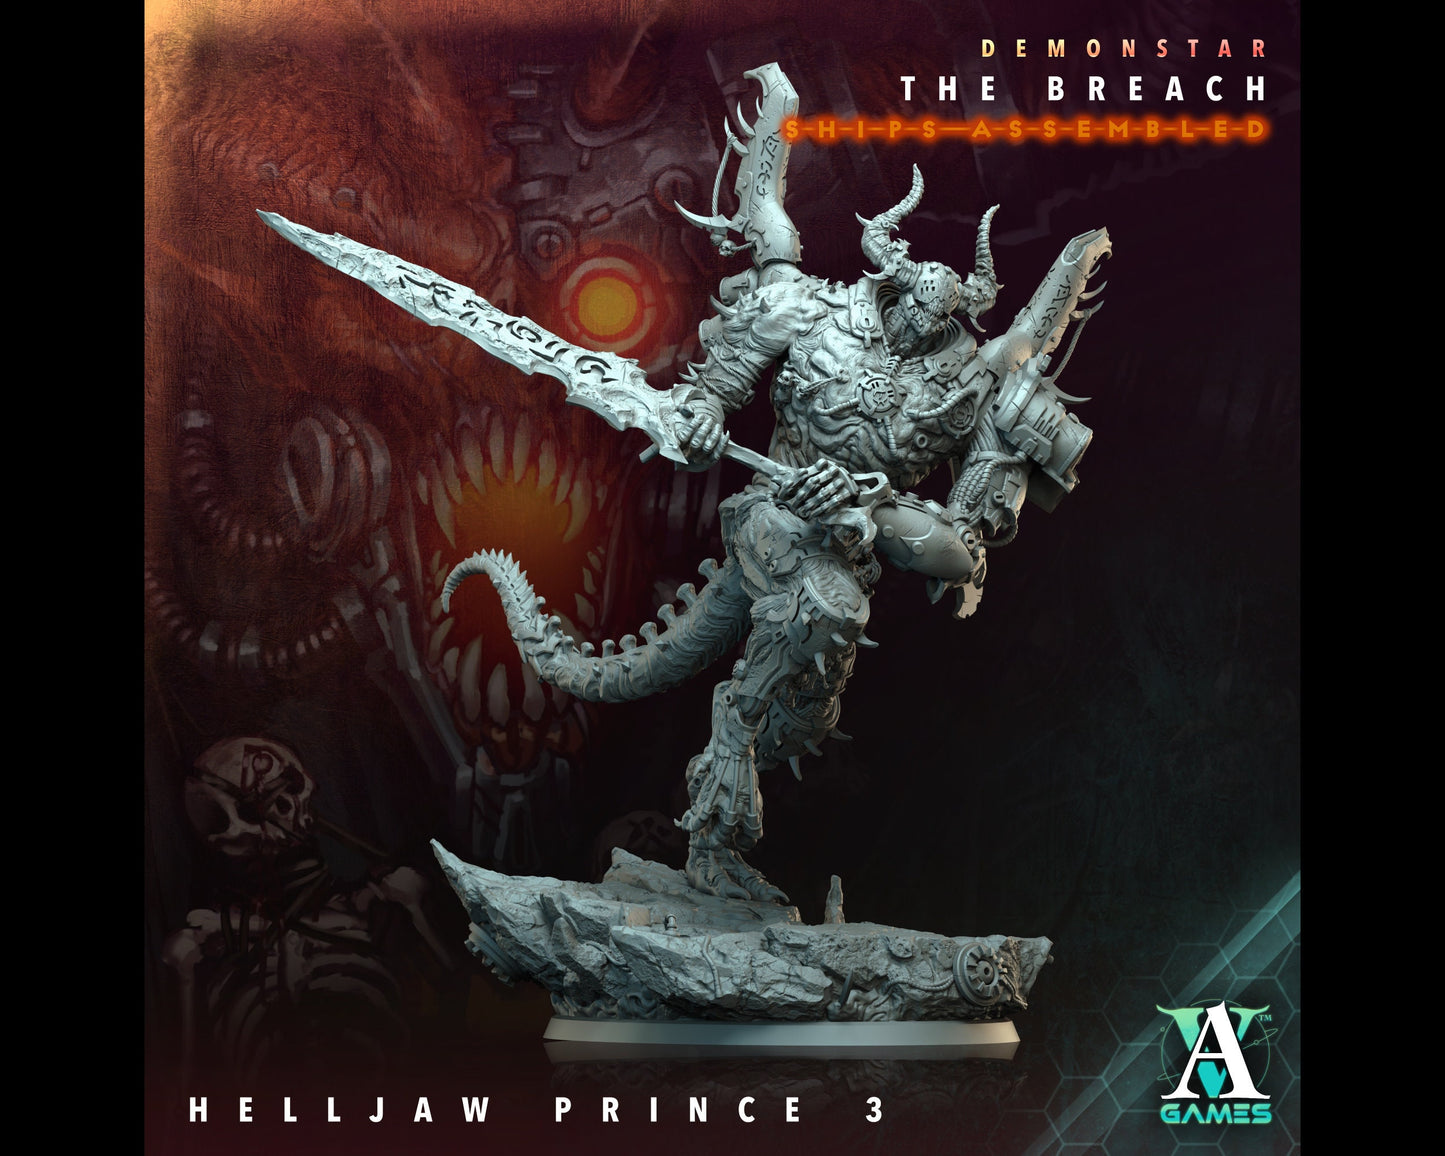 Helljaw Prince 3 - Demonstar: The Breach - Highly Detailed Resin 8k 3D Printed Miniature